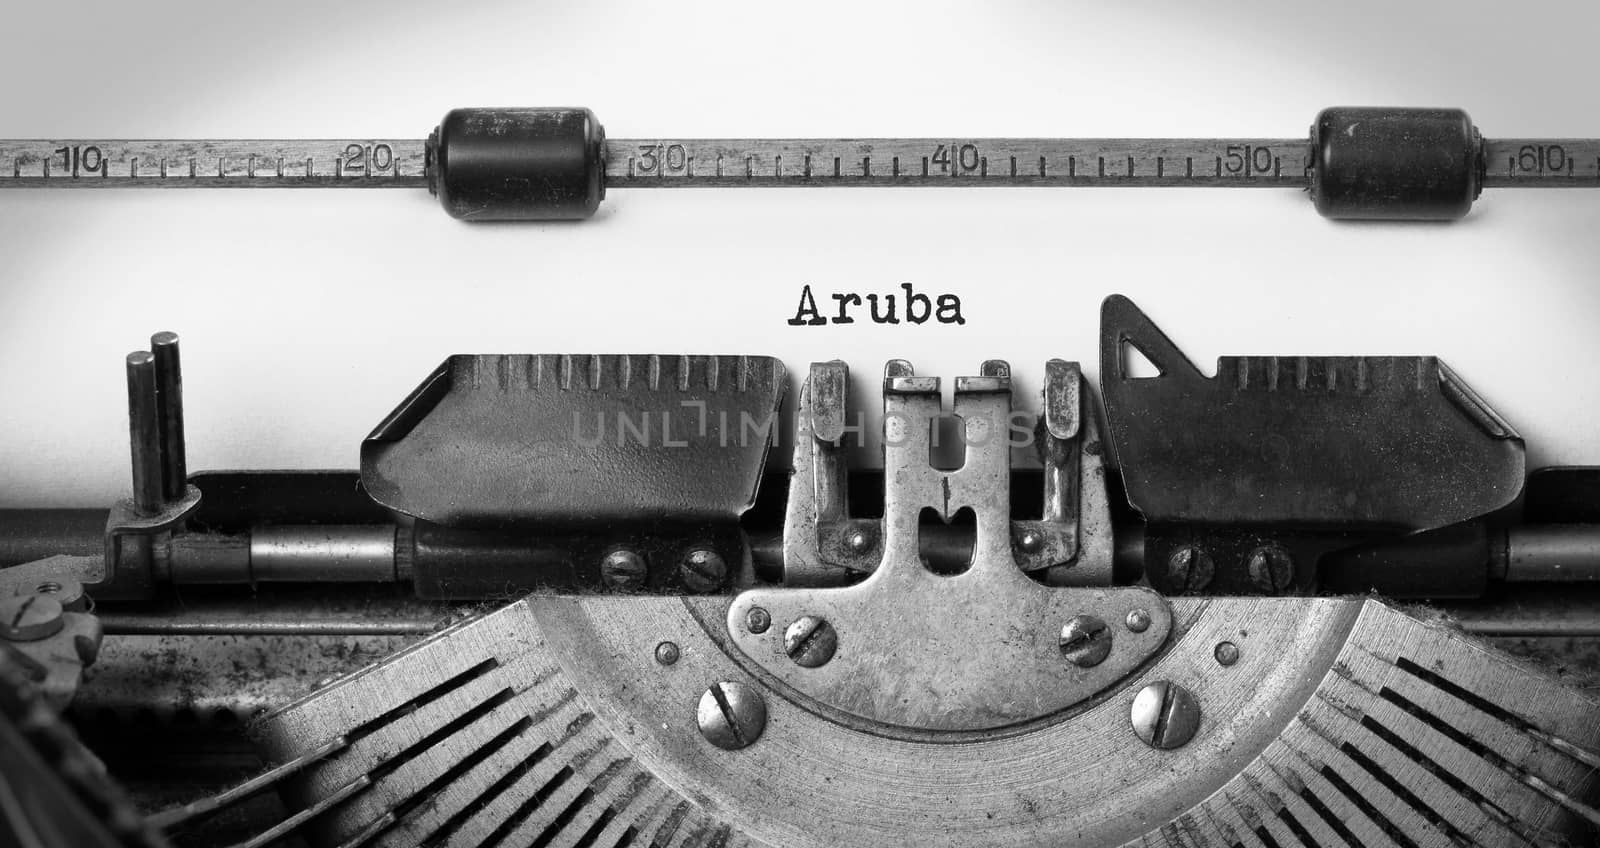 Old typewriter - Aruba by michaklootwijk